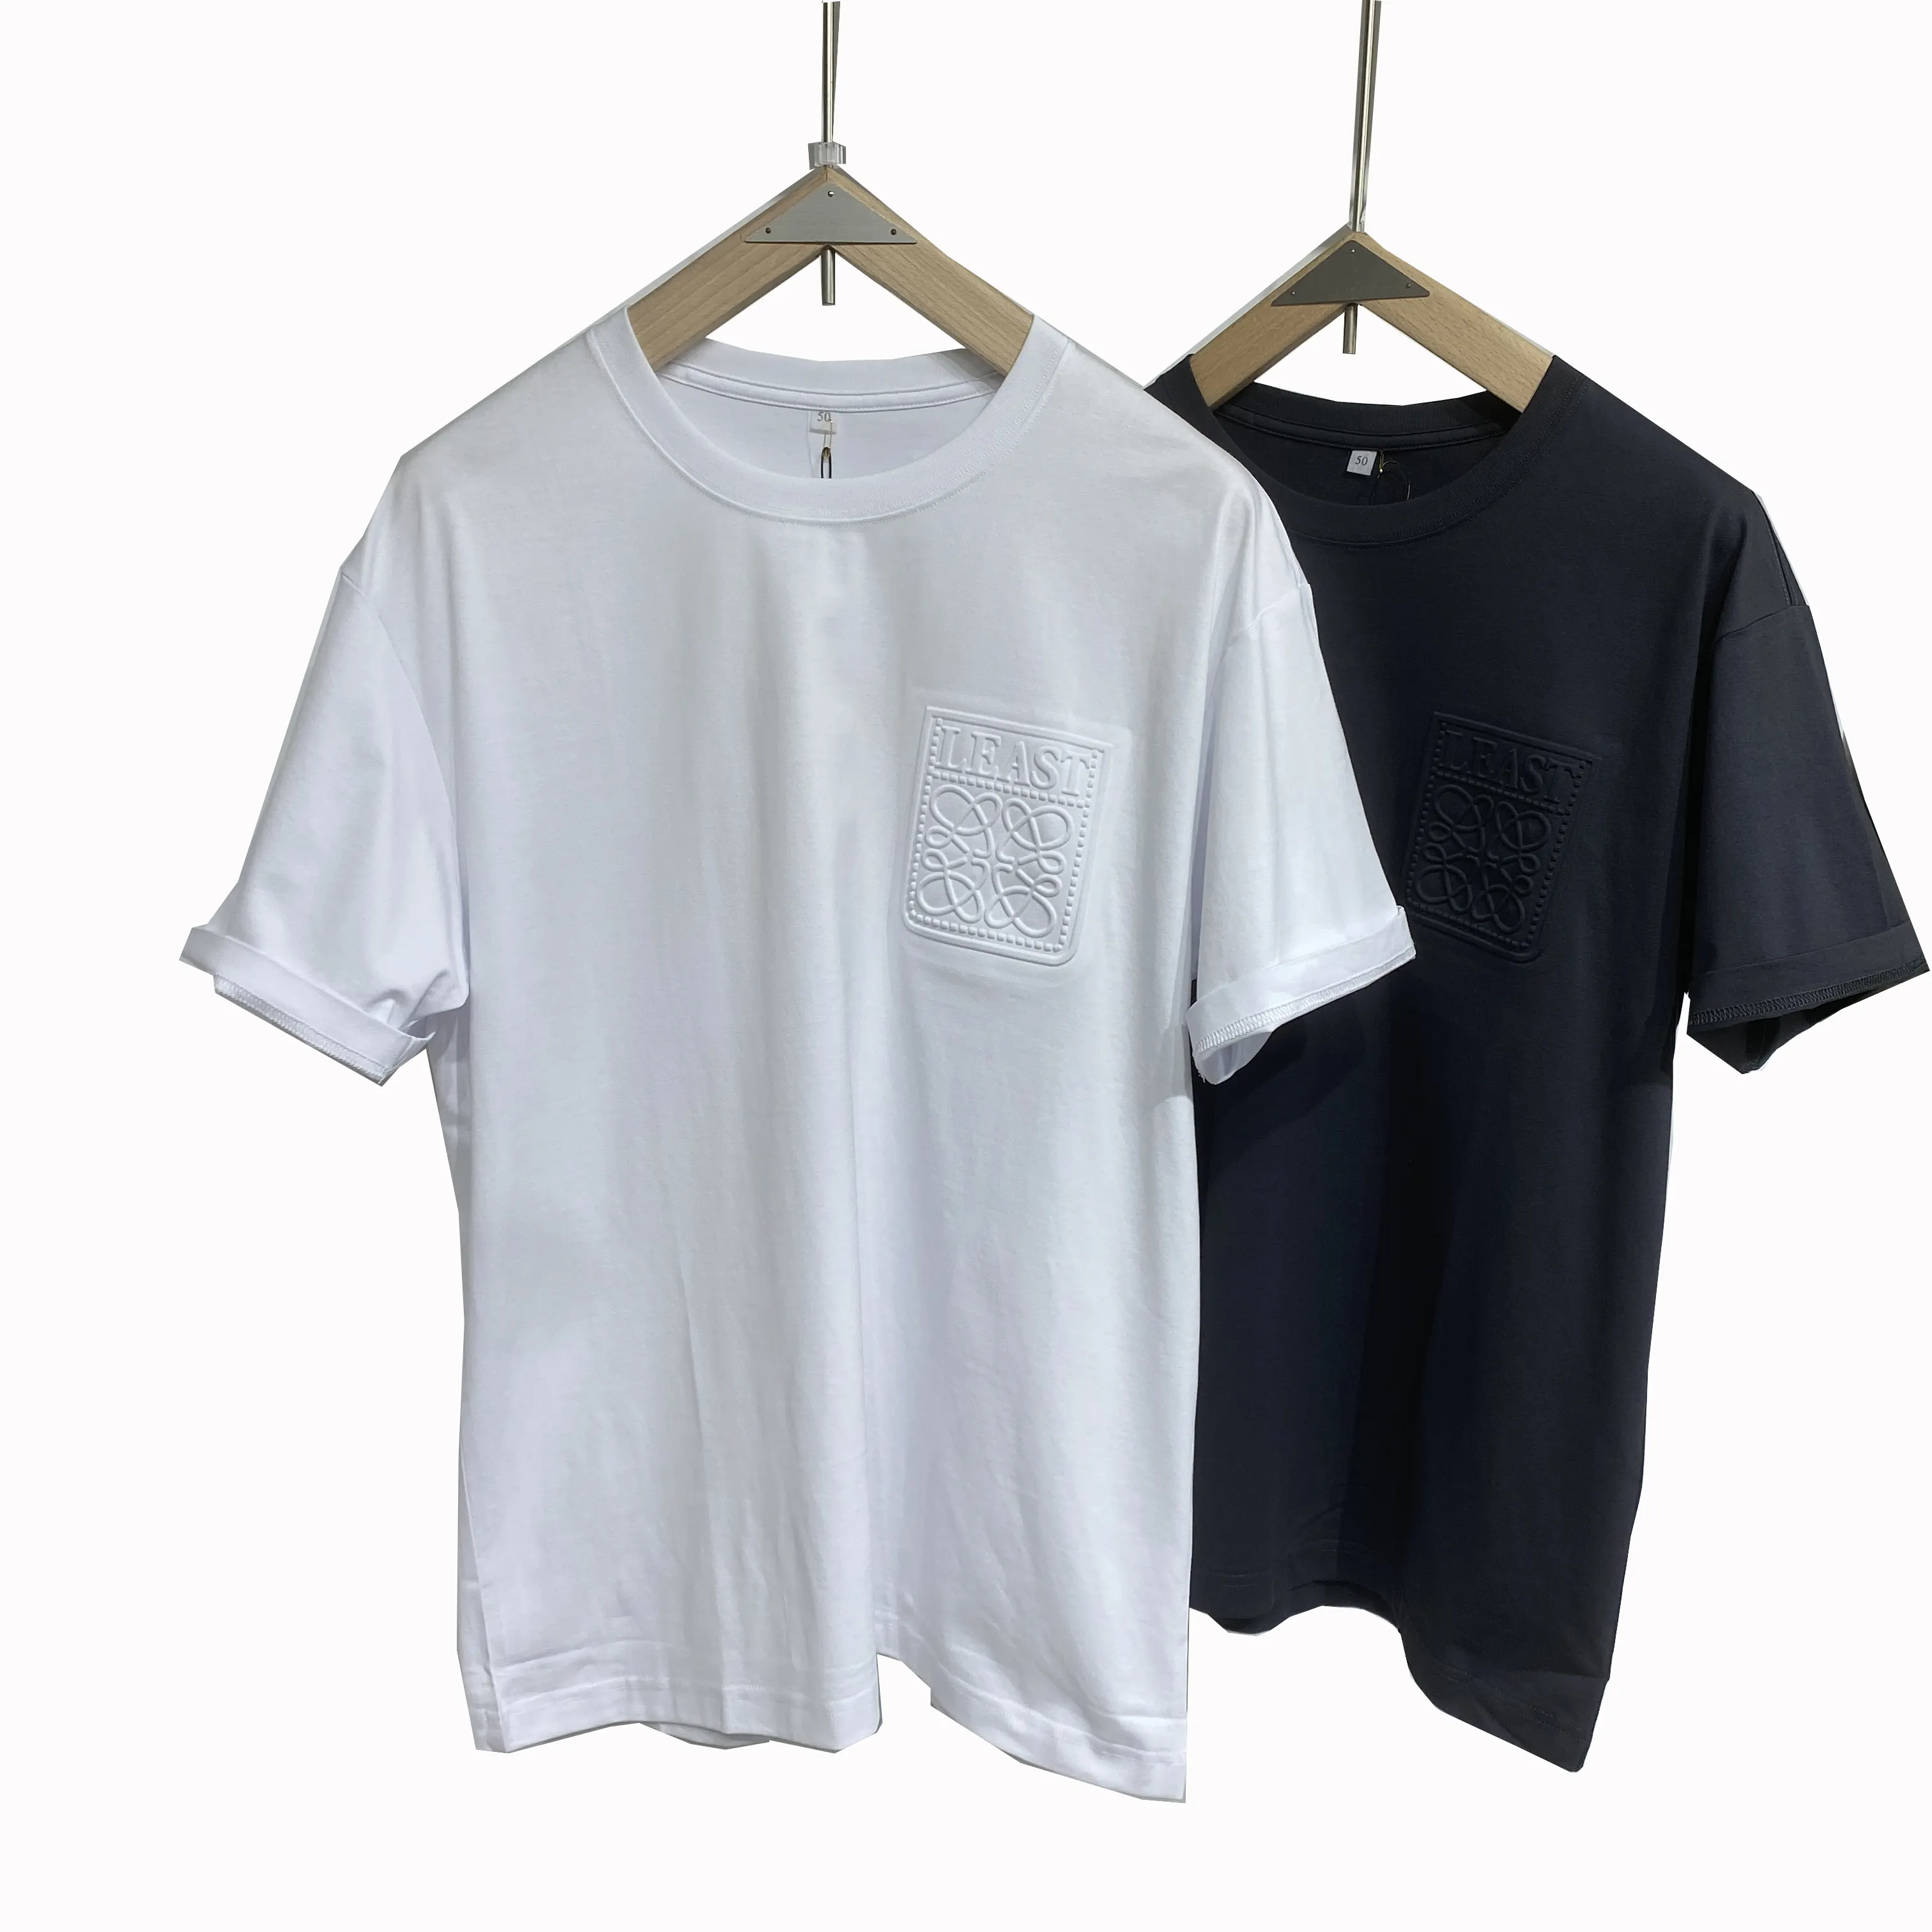 Factory direct sale summer white black short sleeves tshirt men digital printing streetstyle young popular cotton tshirt for men